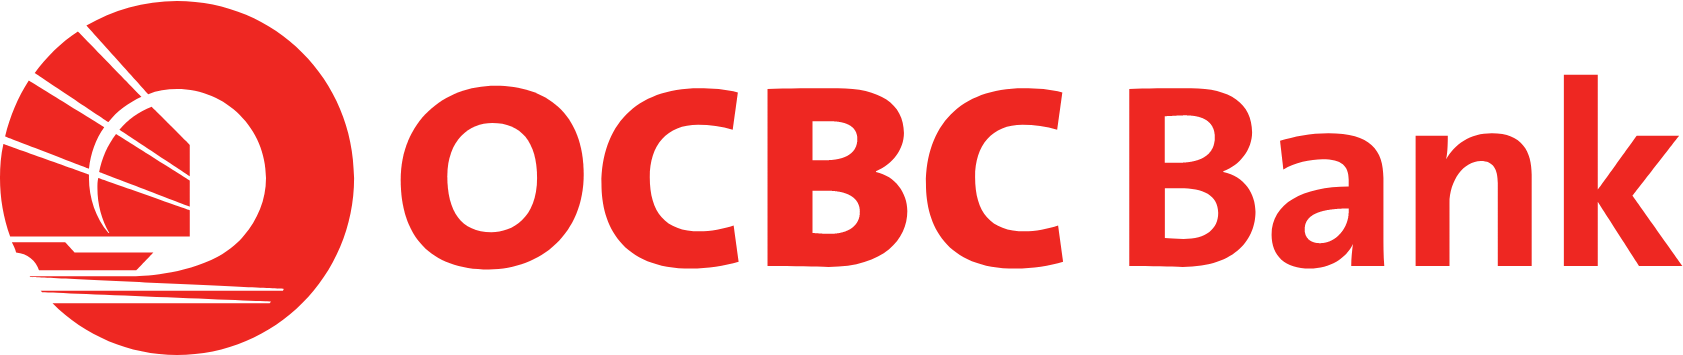 OCBC Bank logo large (transparent PNG)